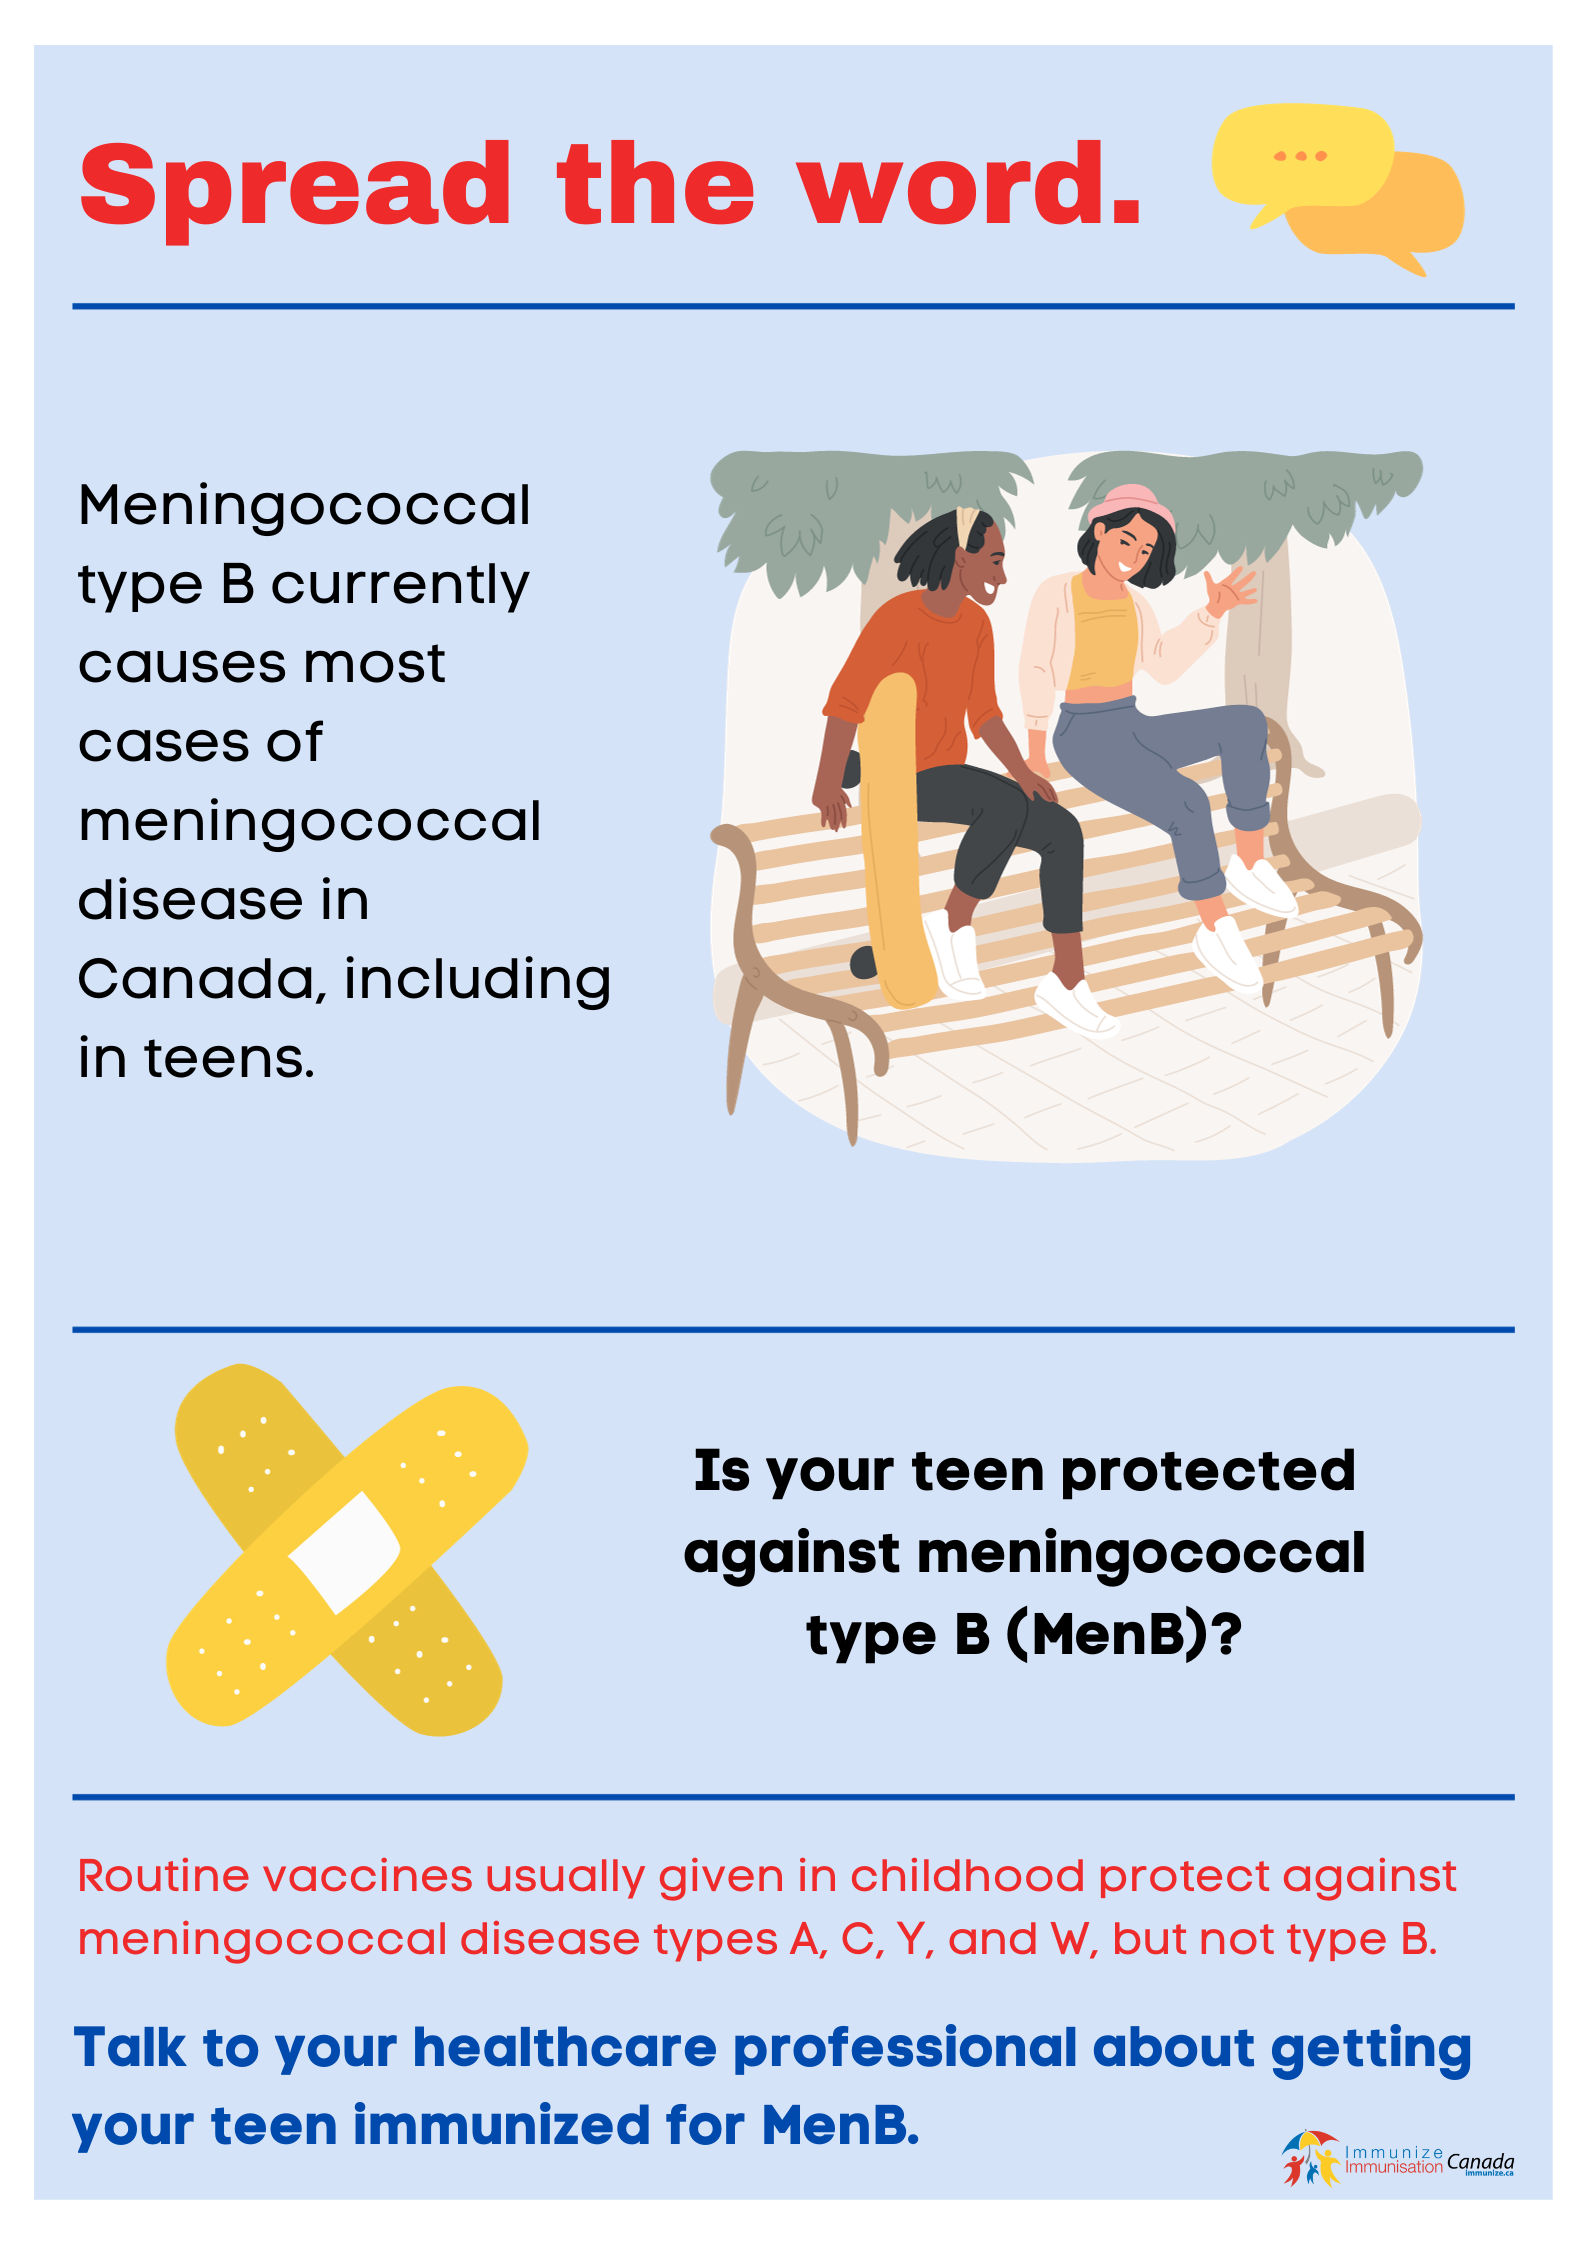 Spread the word - meningococcal B immunization - poster 2